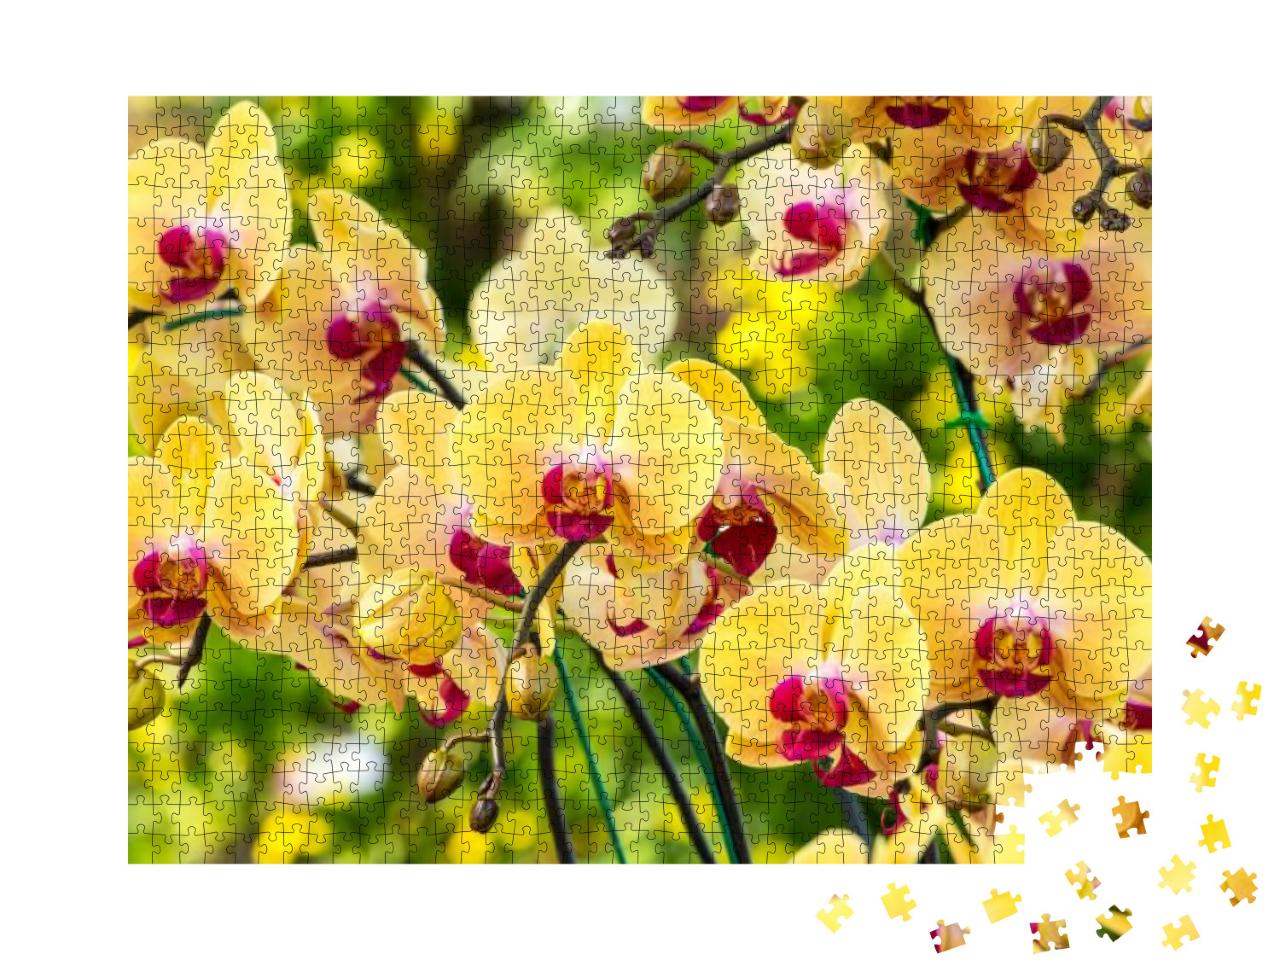 Puzzle 1000 Teile „Wunderschöne gelbe Orchidee“